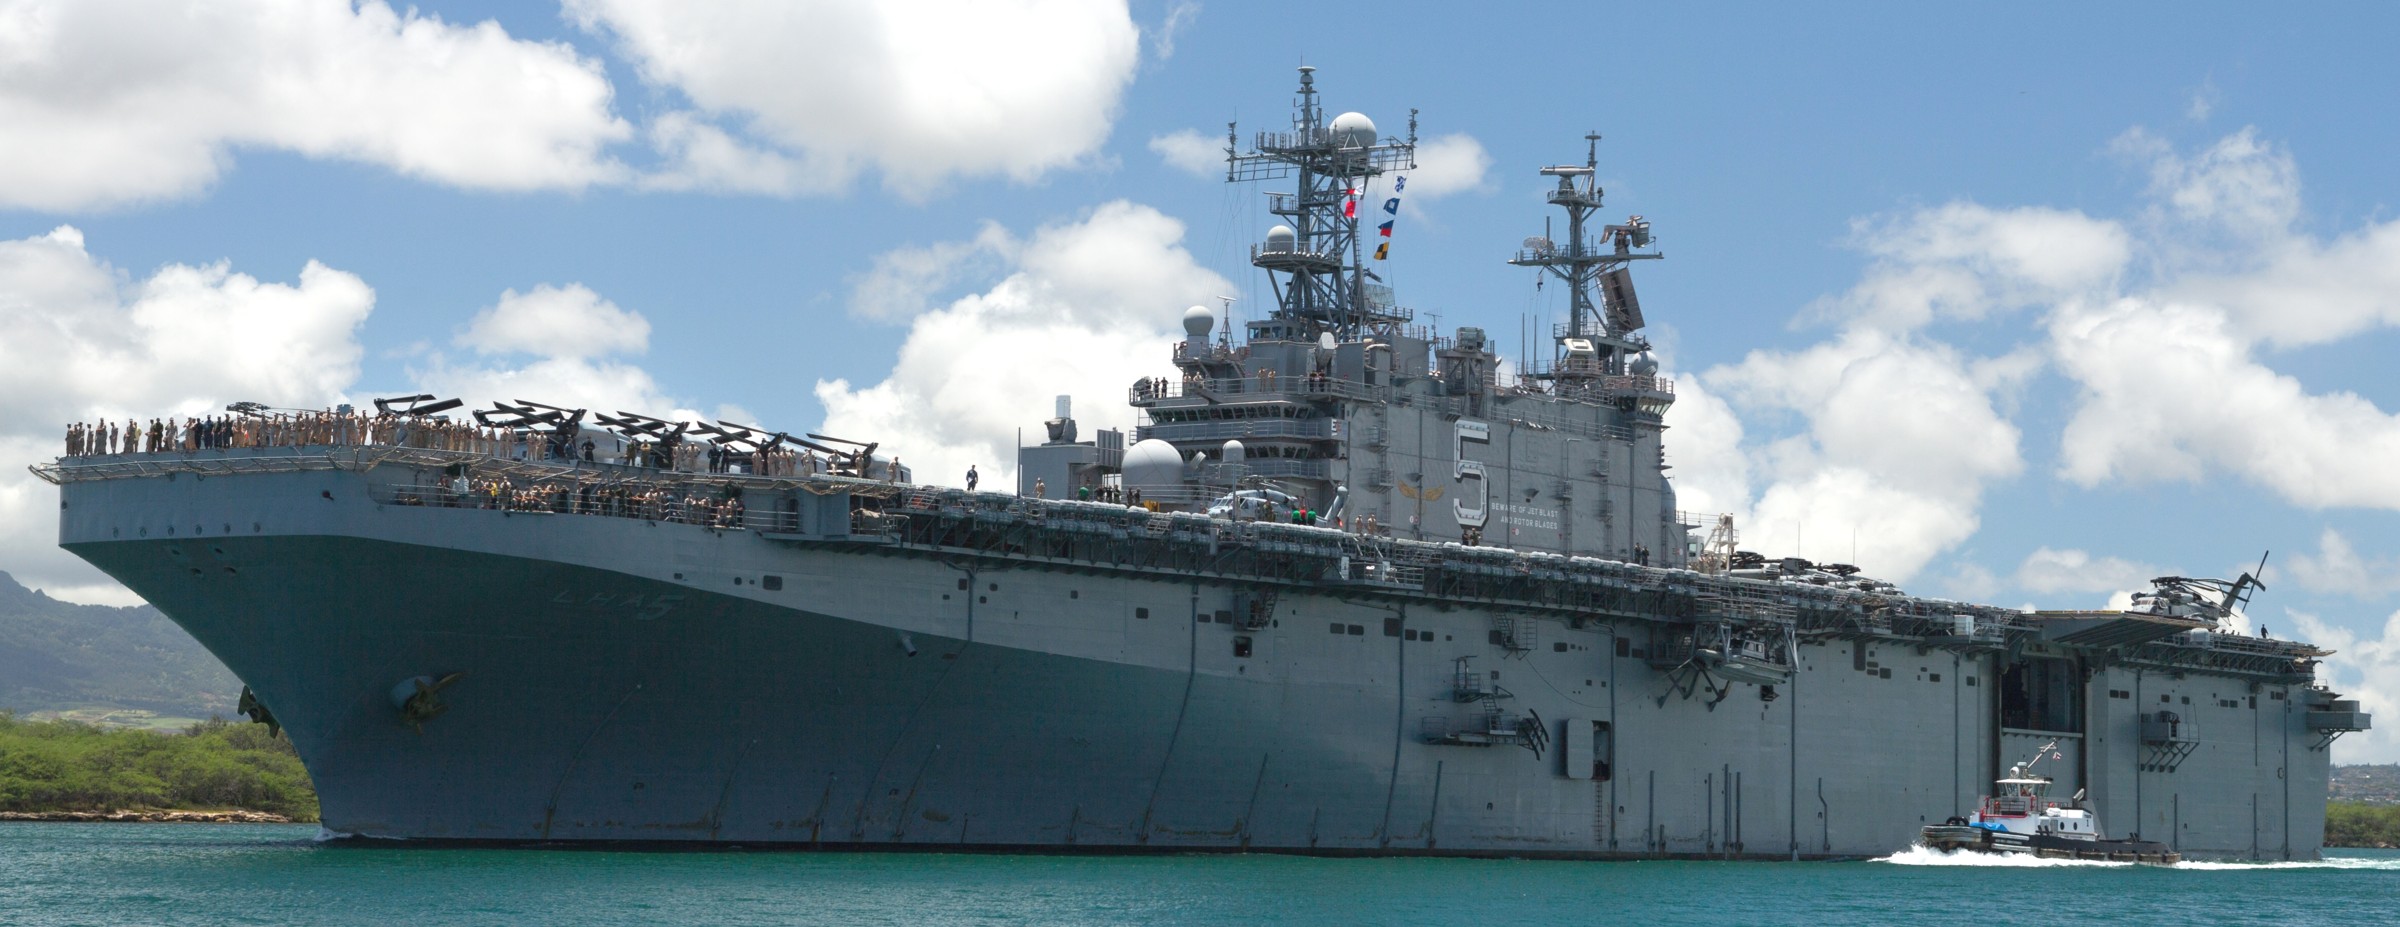 lha-5 uss peleliu tarawa class amphibious assault ship landing helicopter us navy pearl harbor hickam hawaii 107